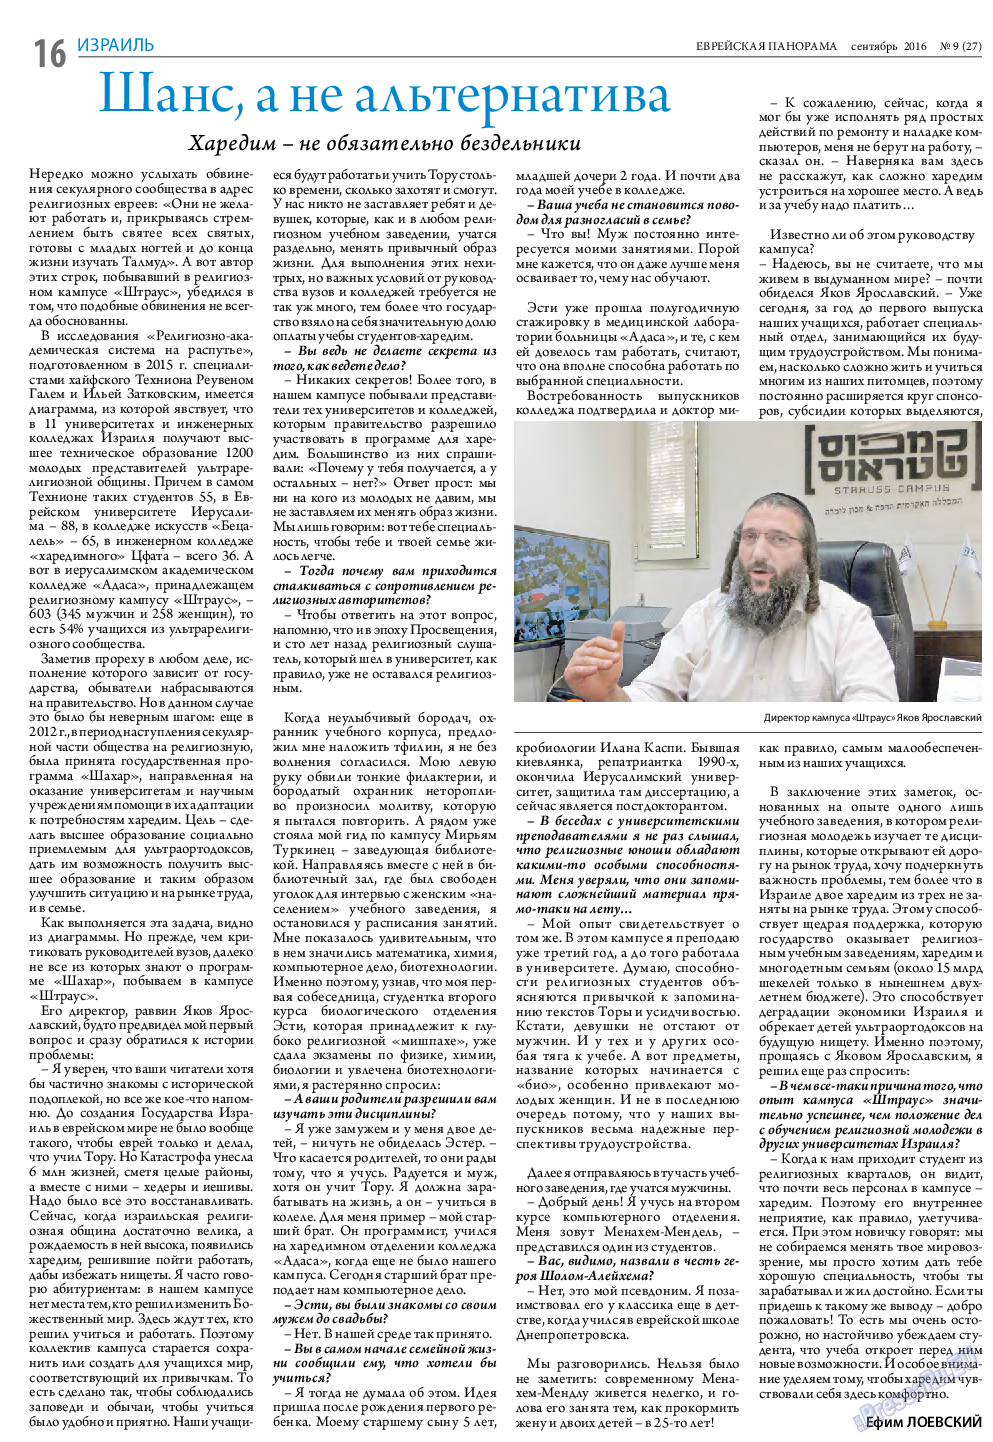 Еврейская панорама, газета. 2016 №9 стр.16